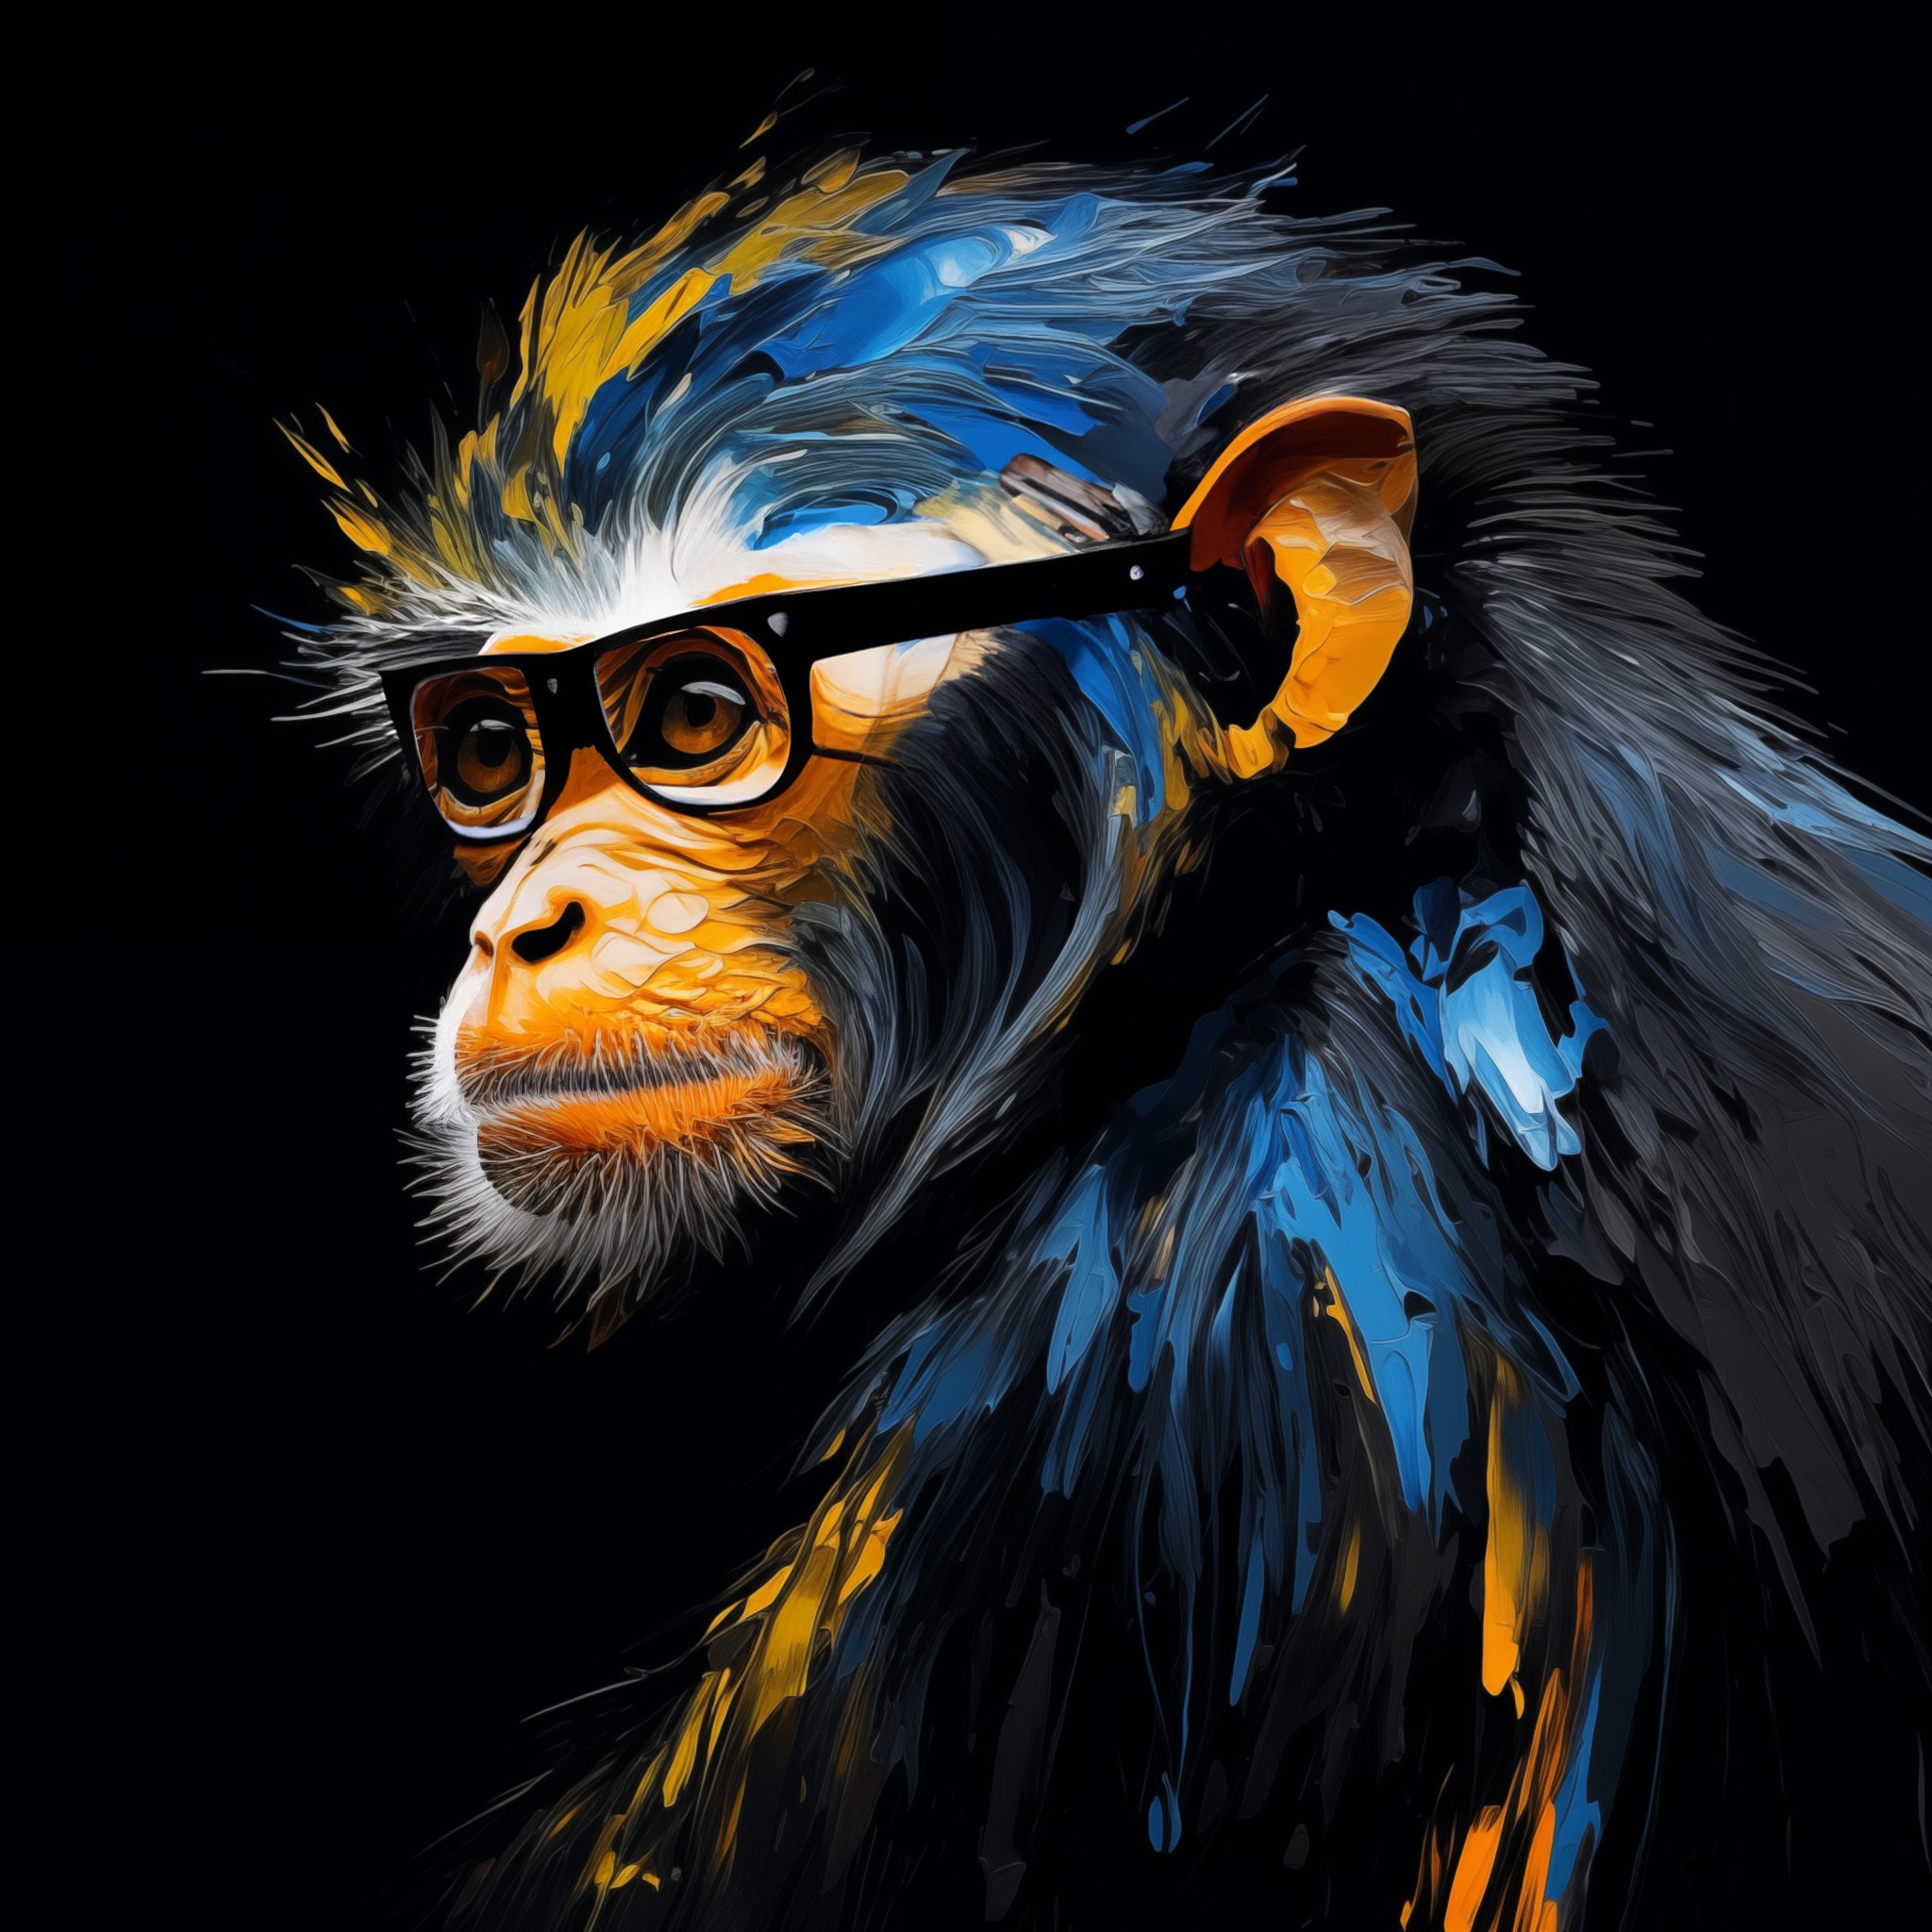 Monkey wearing glasses